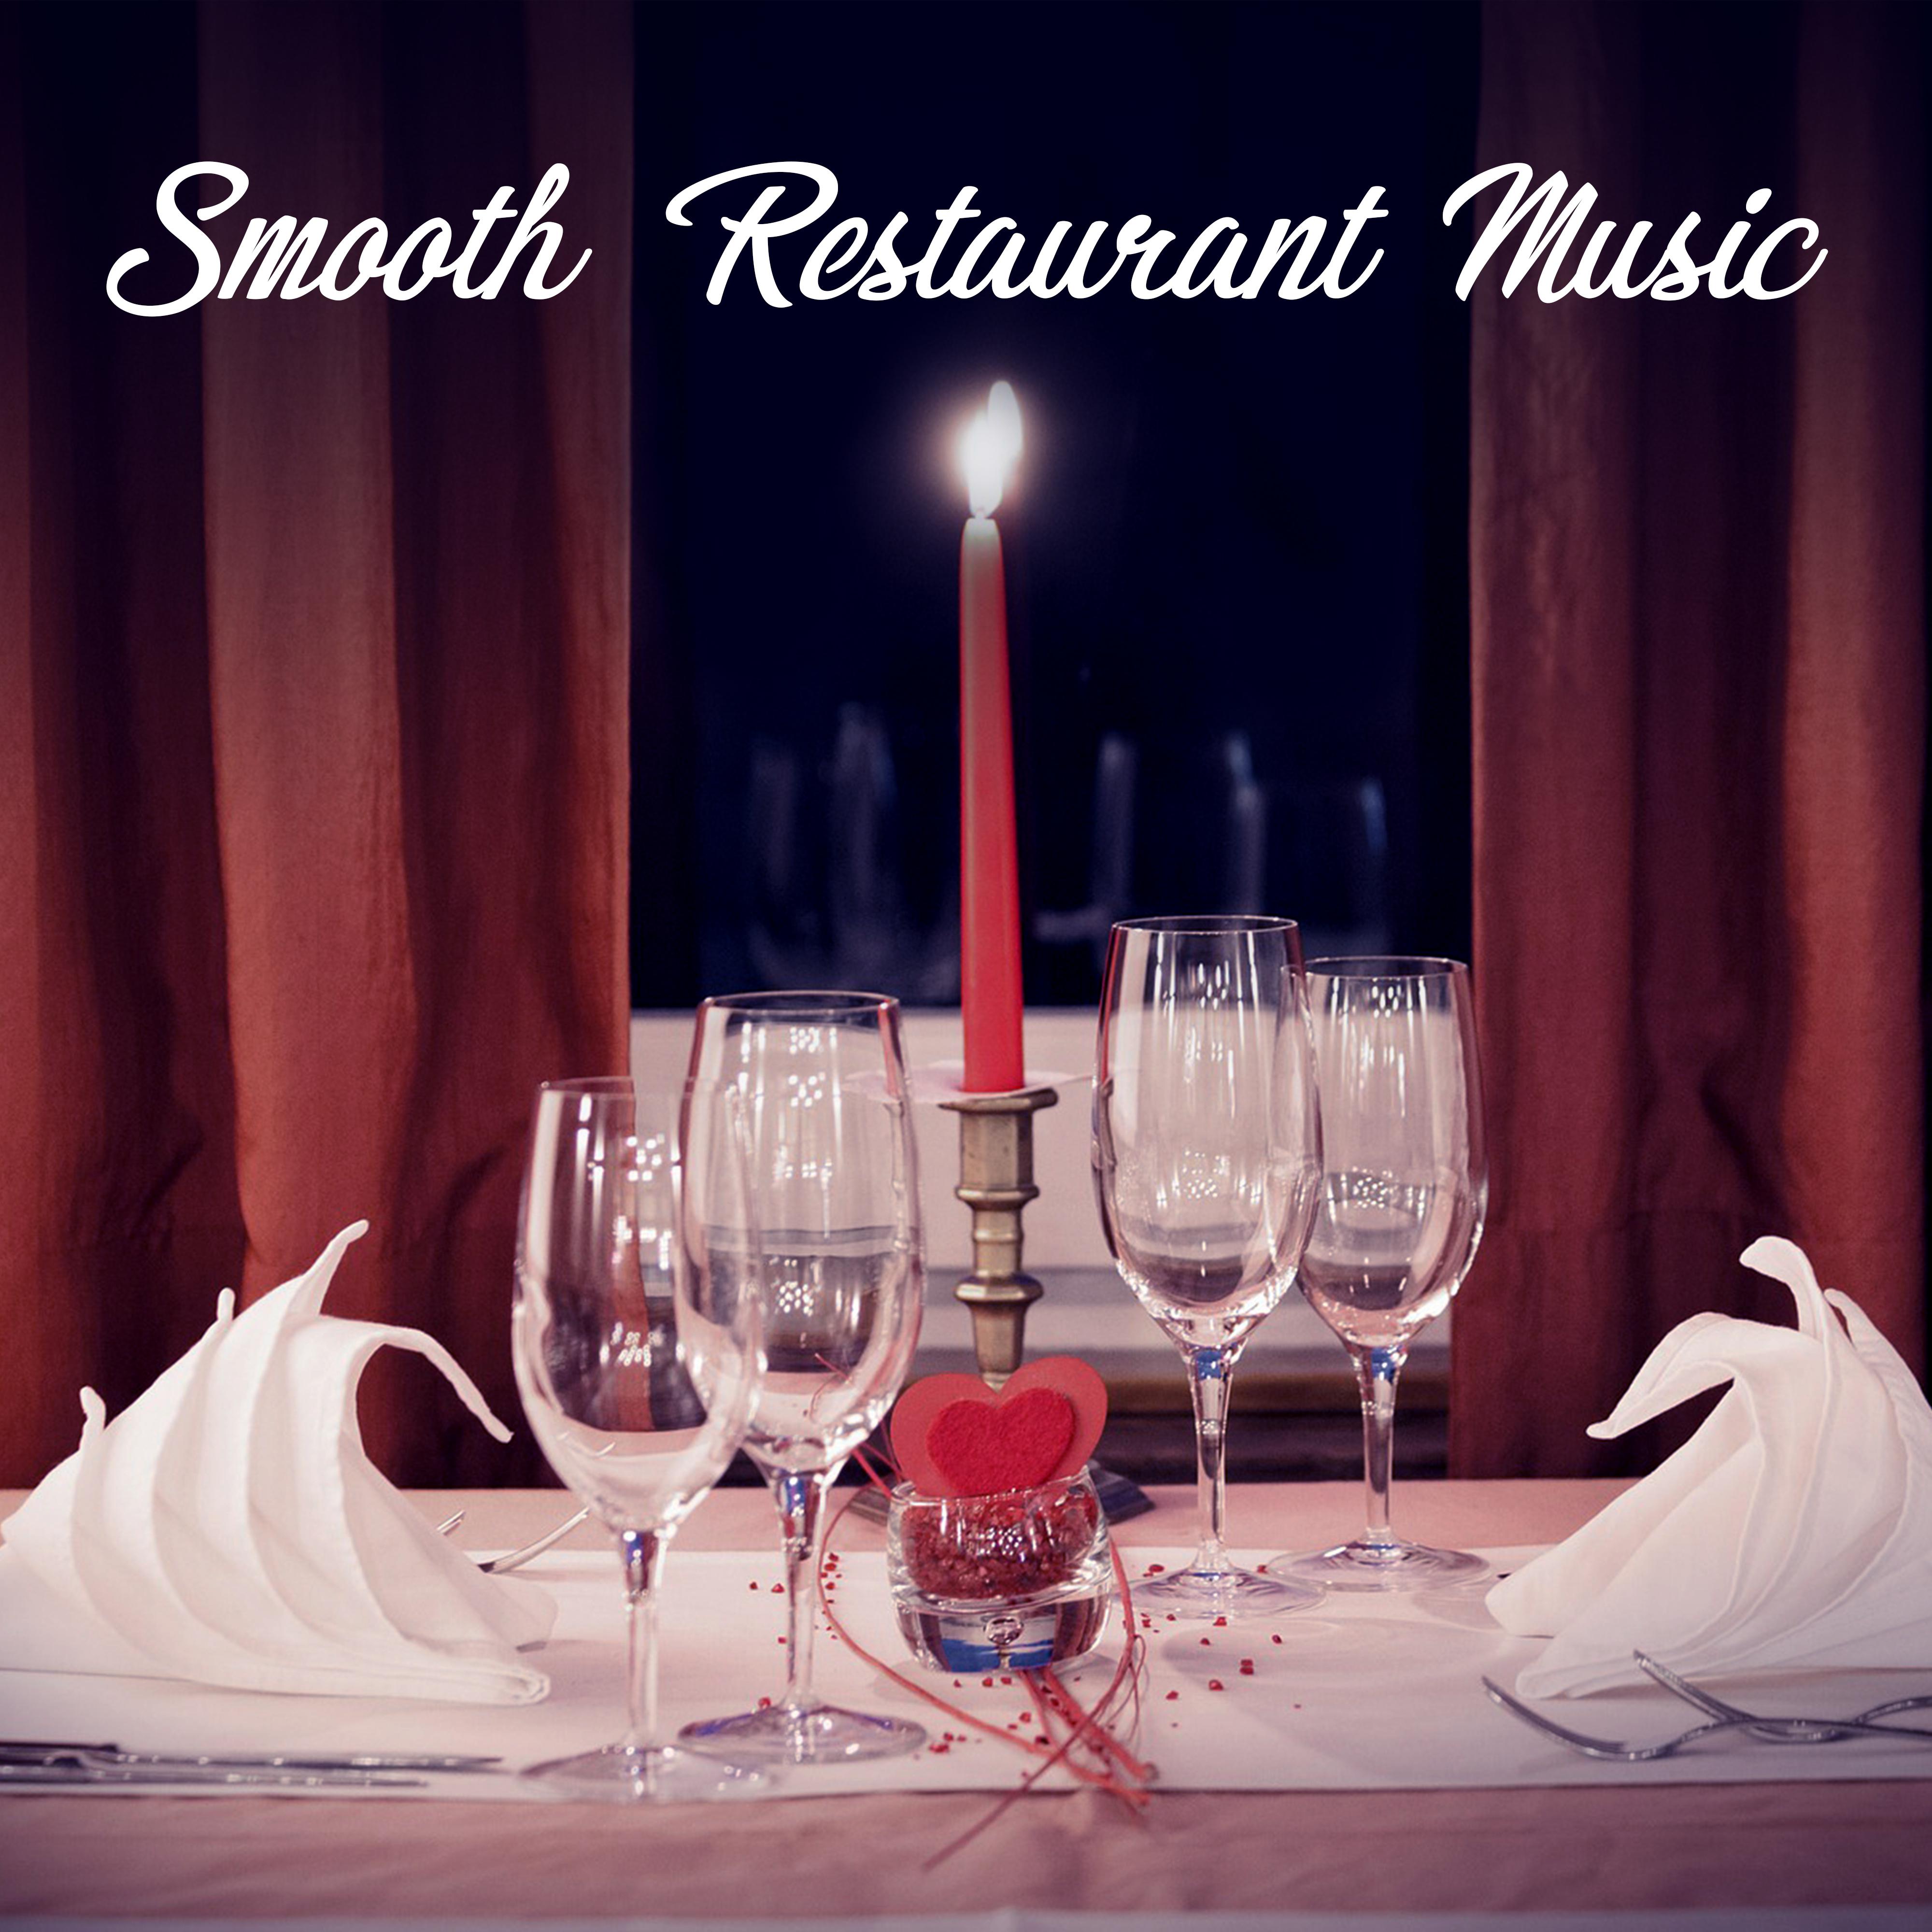 Smooth Restaurant Music  Instrumental Jazz, Mellow Piano for Restaurant  Cafe, Ambient Jazz, Retro Jazz